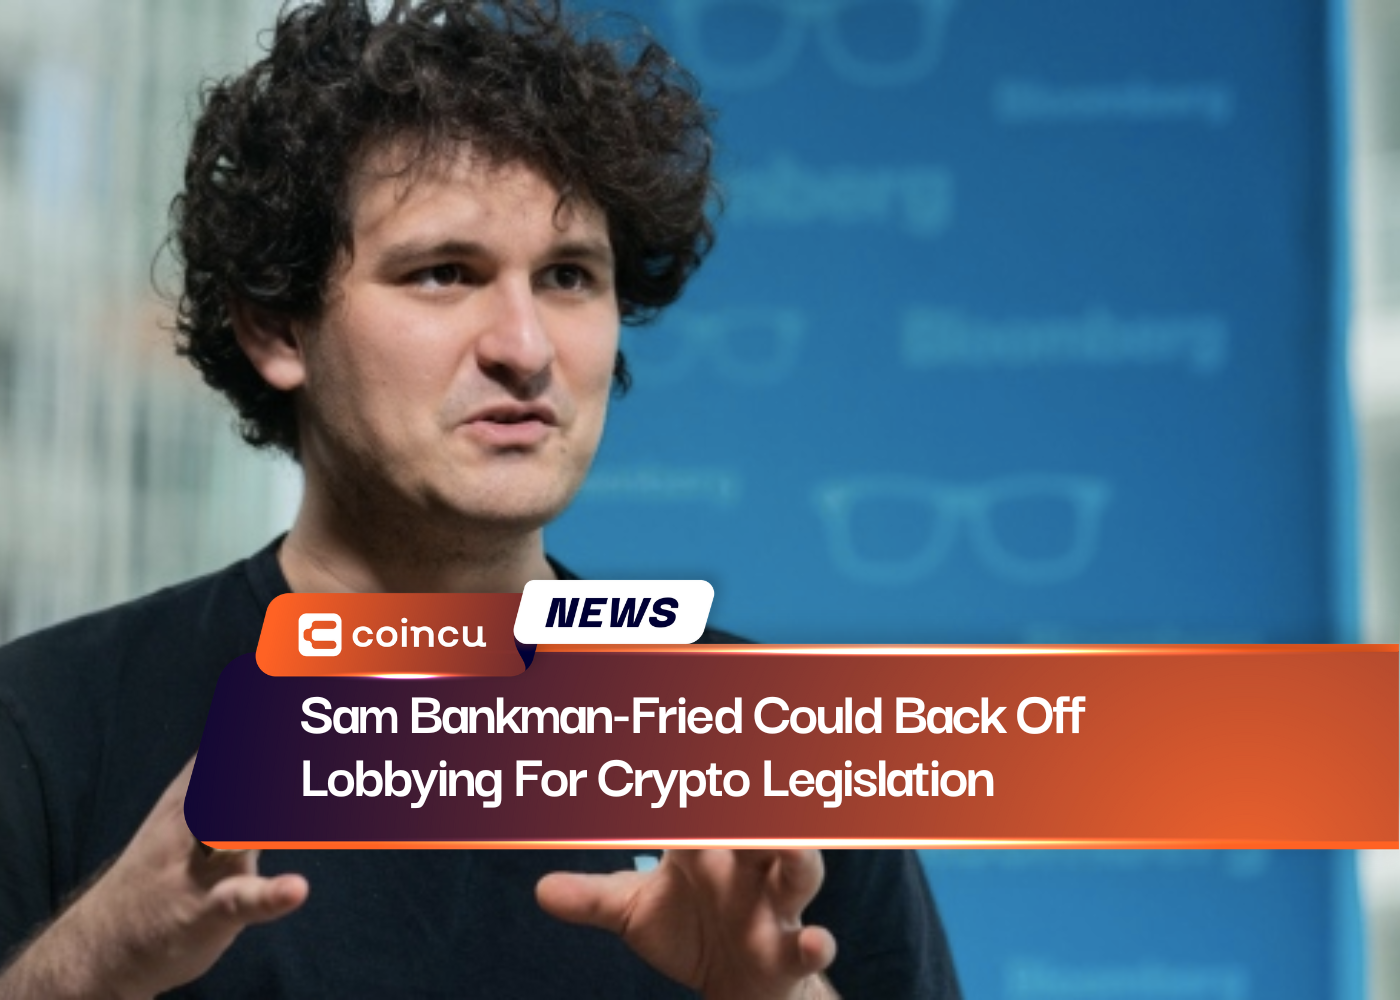 Sam Bankman-Fried Could Back Off Lobbying For Crypto Legislation